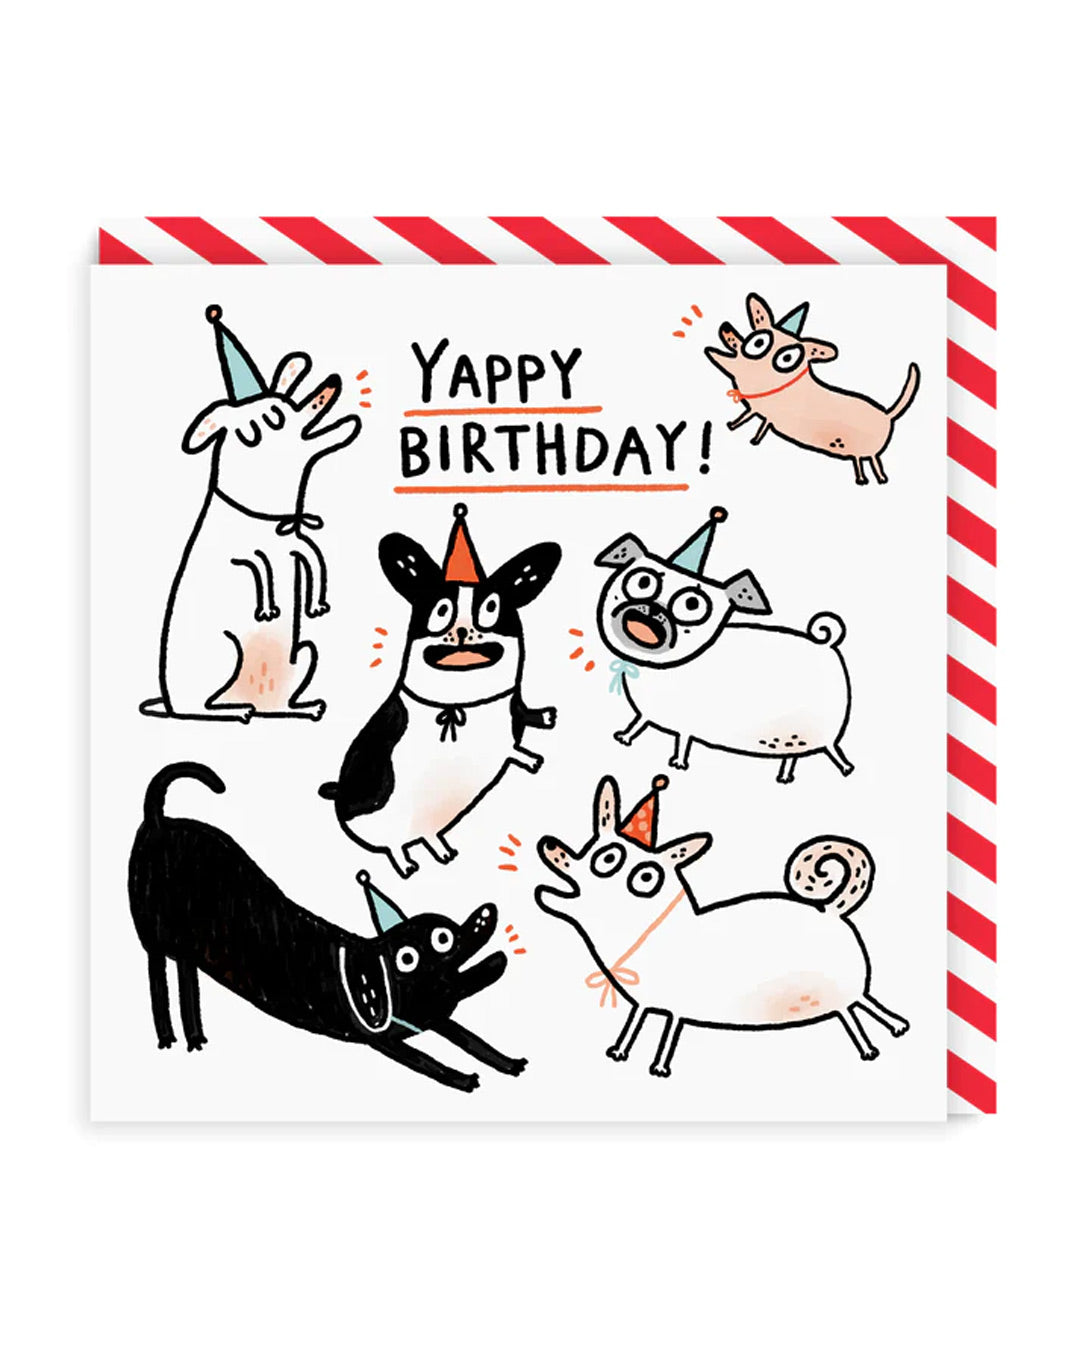 Funny Birthday Card Yappy Birthday Card